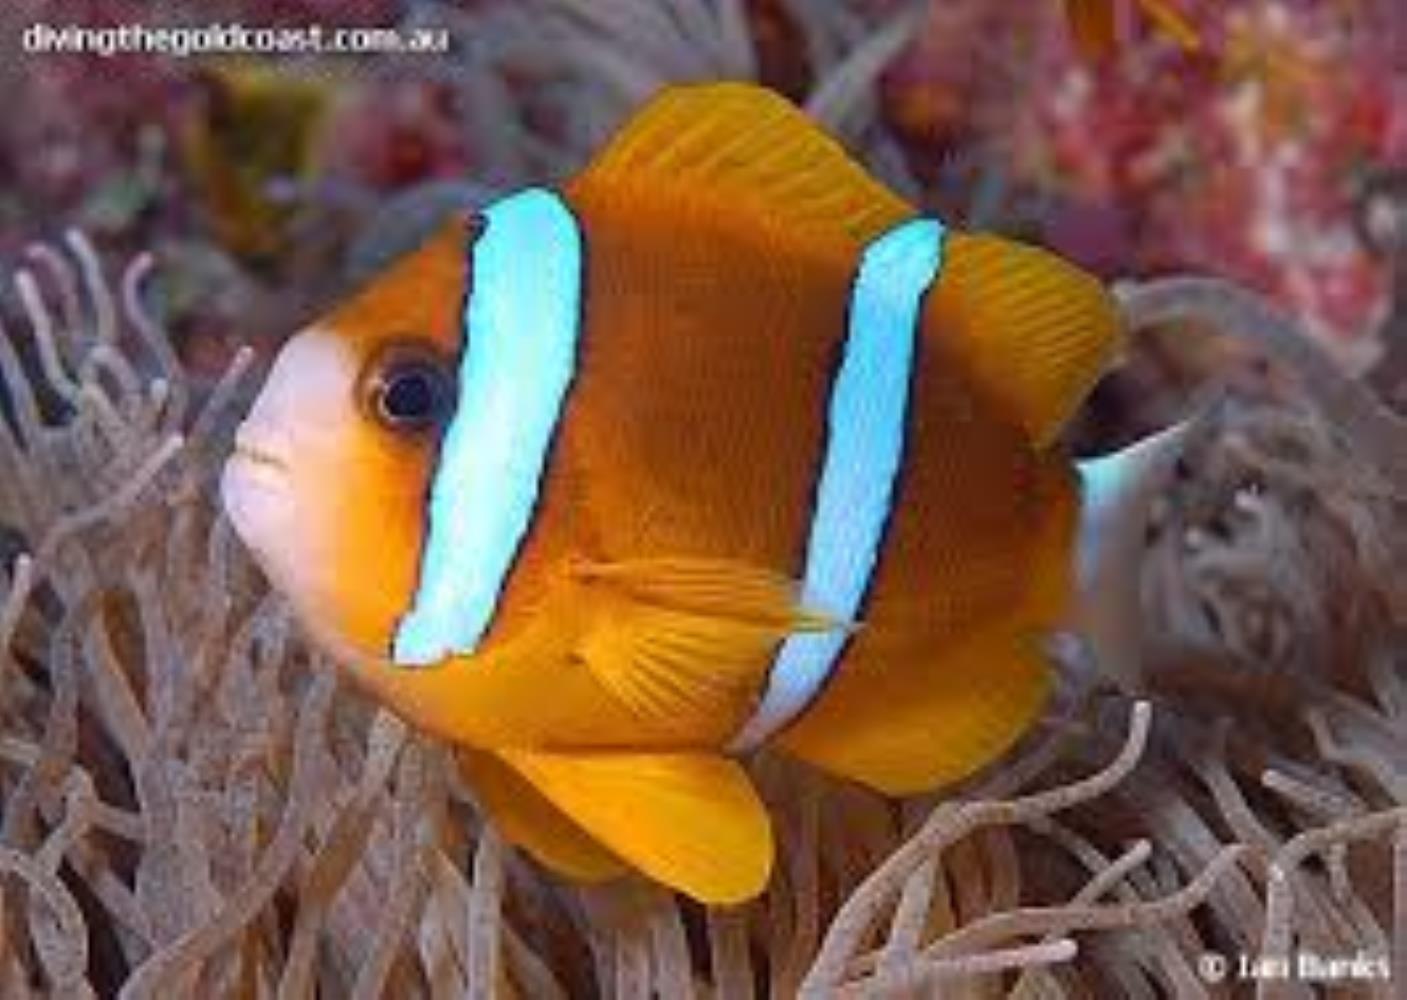 Barrier Reef Anemonefish